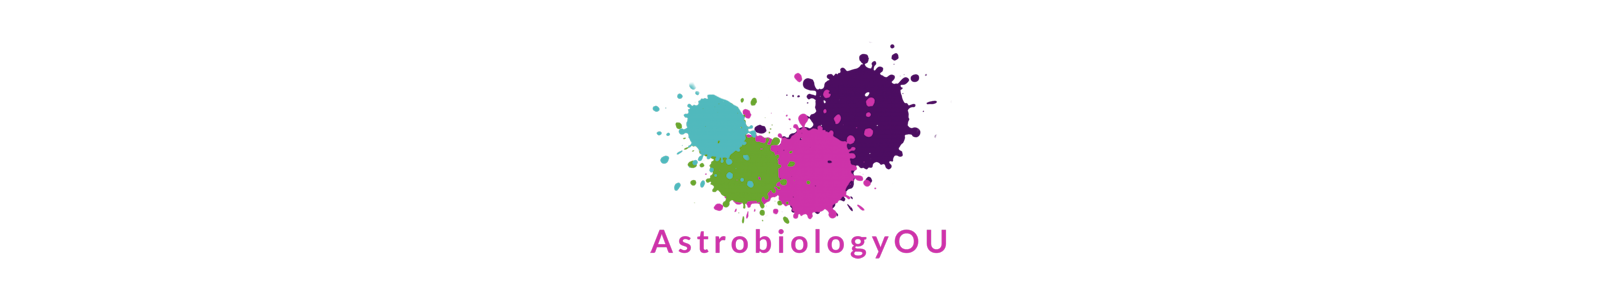 About AstrobiologyOU